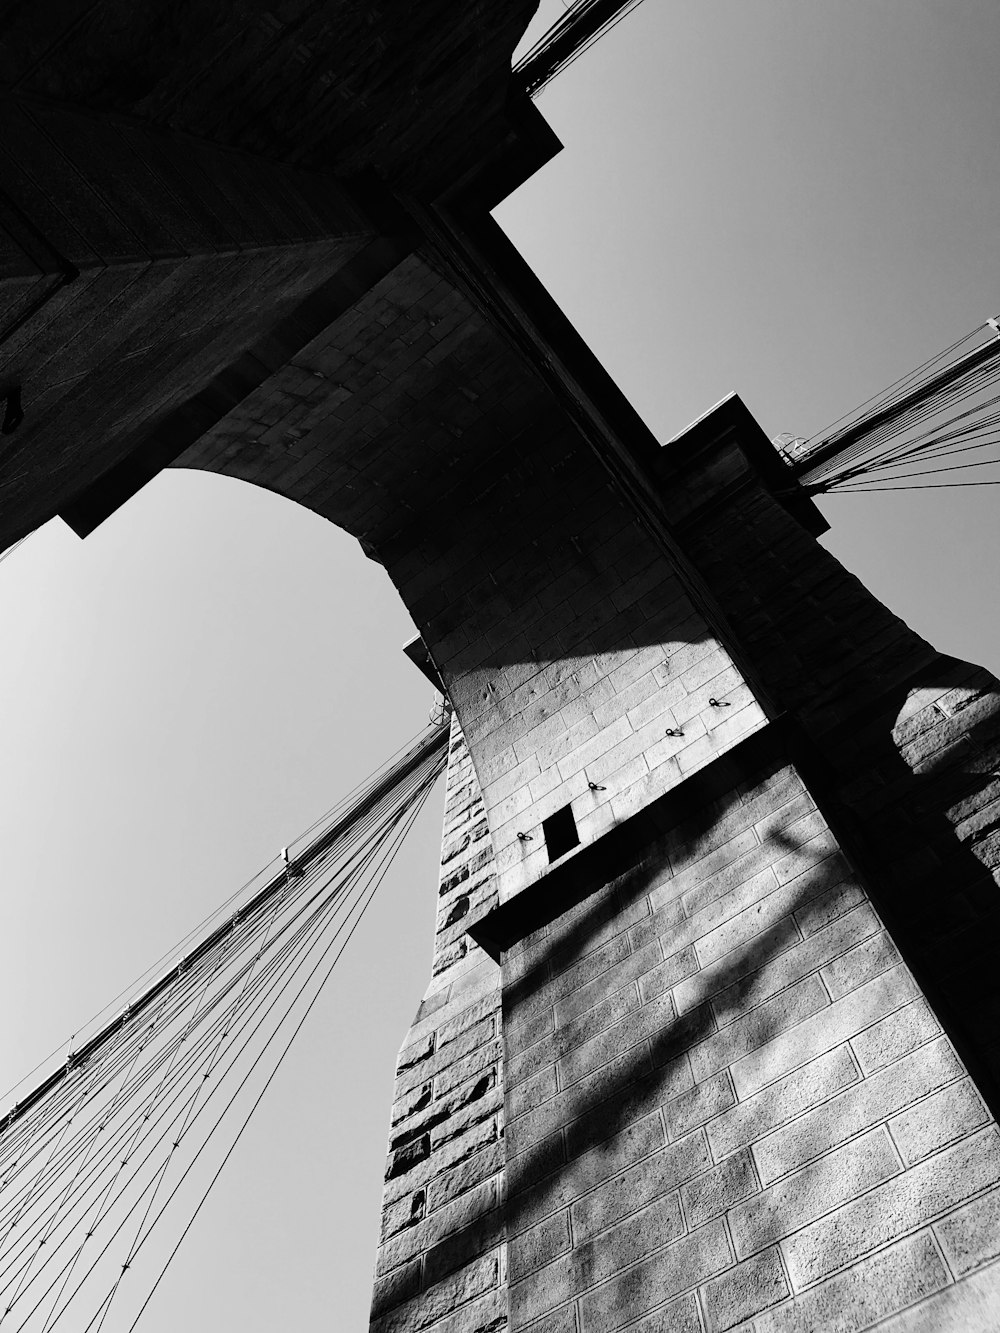 grayscale photography of concrete bridge